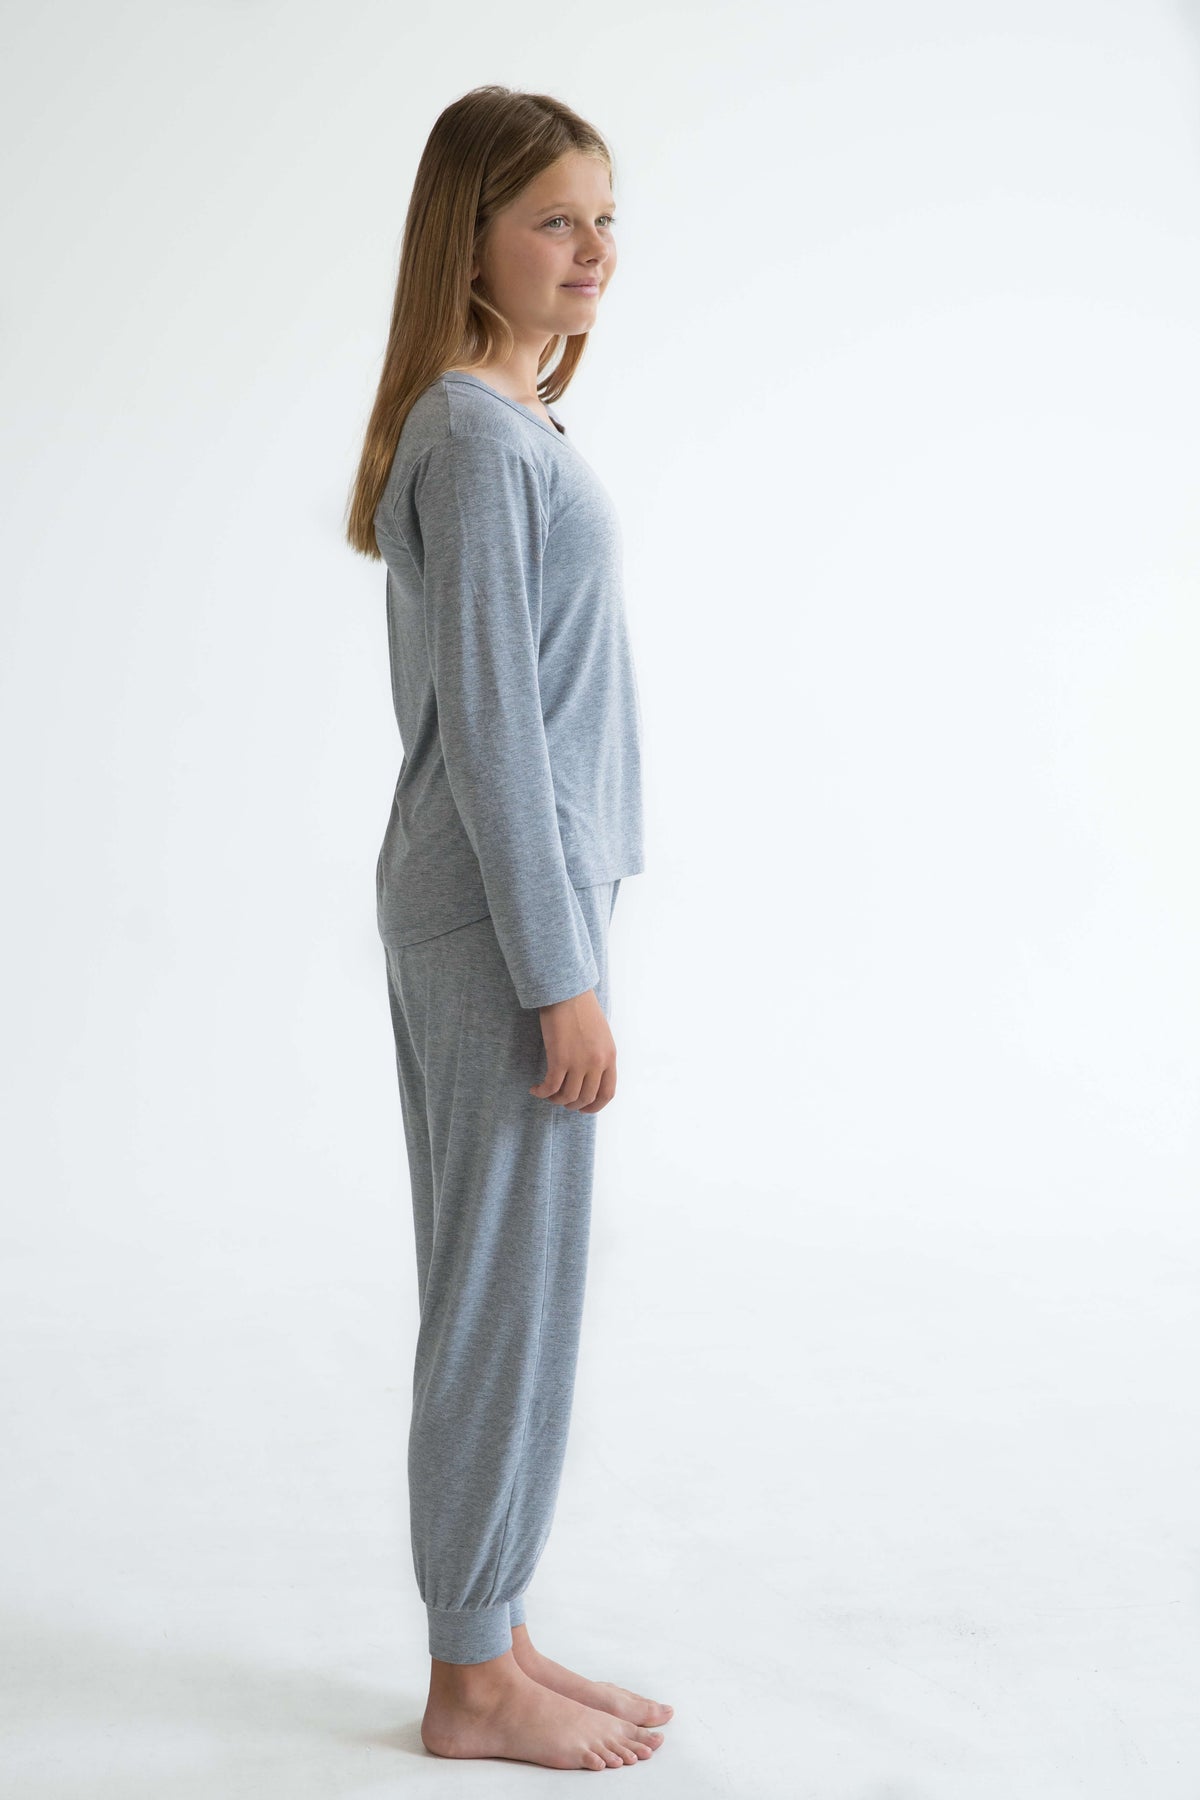 grey girls winter pyjamas set long pants and long sleeve top by Love Haidee Australia side